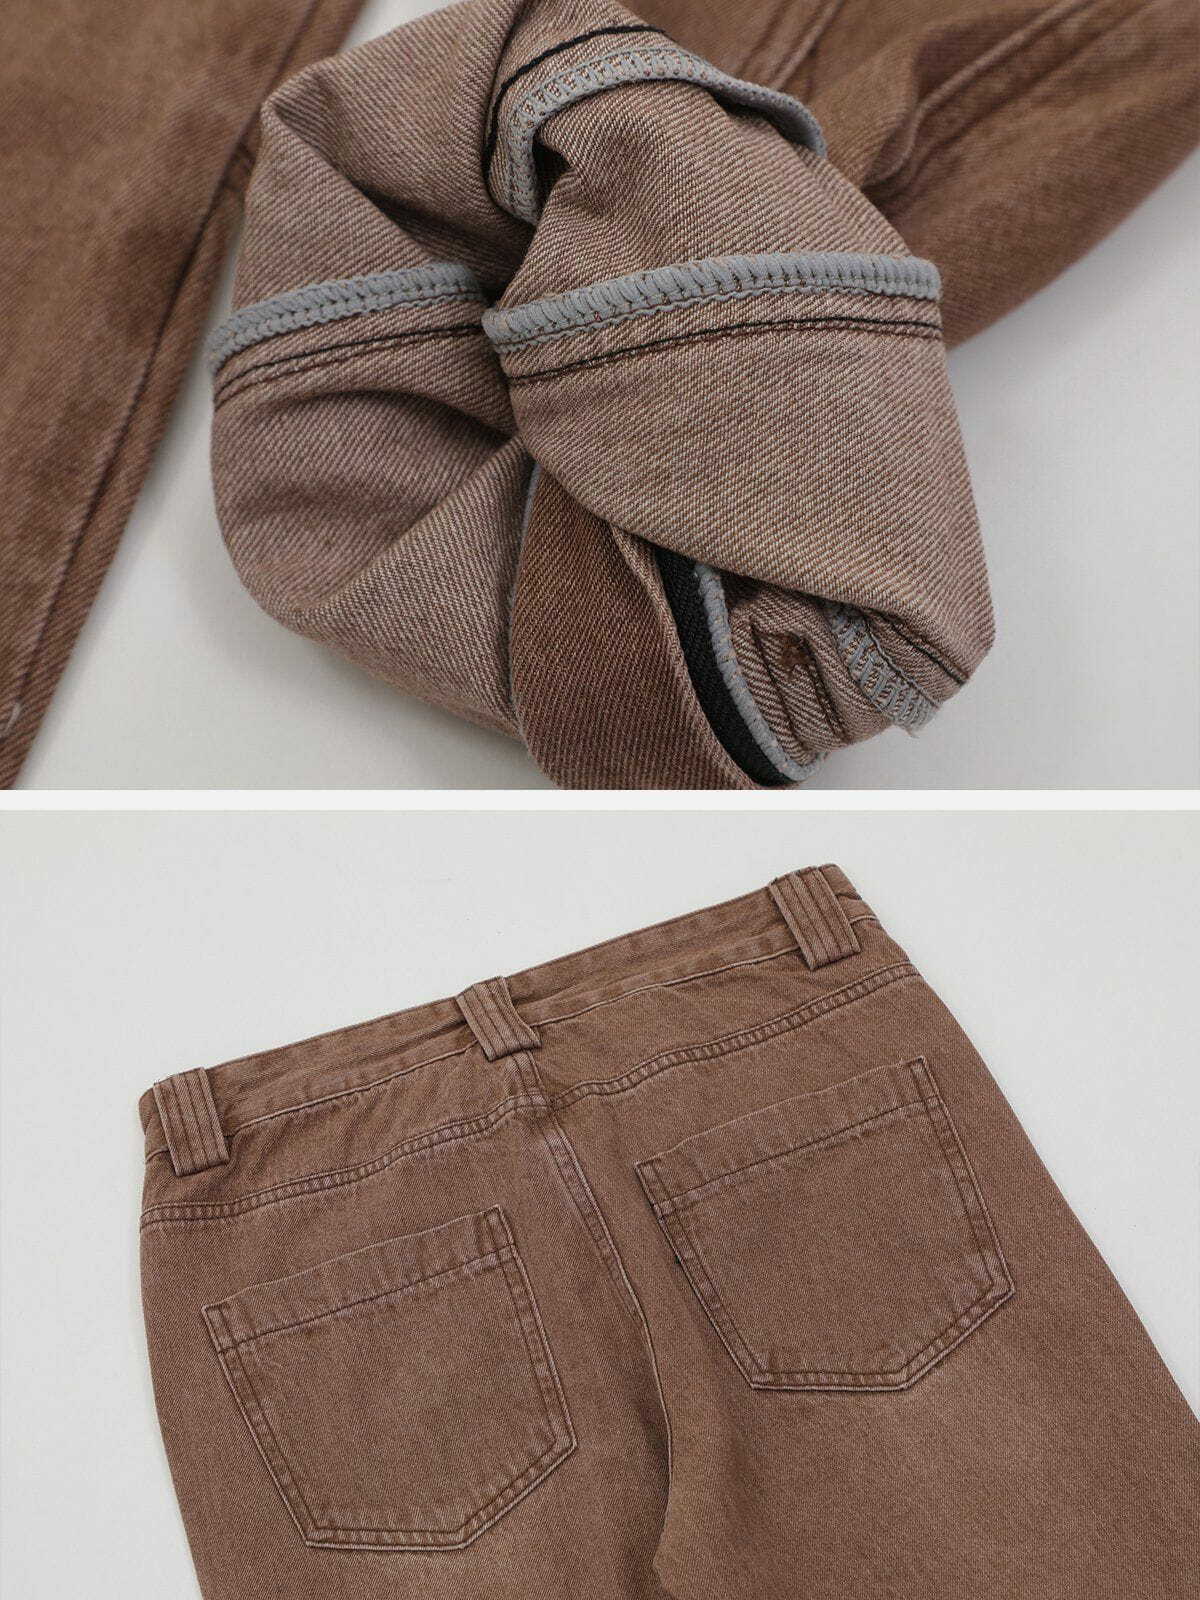 retro line design jeans vintage washed & edgy 1392